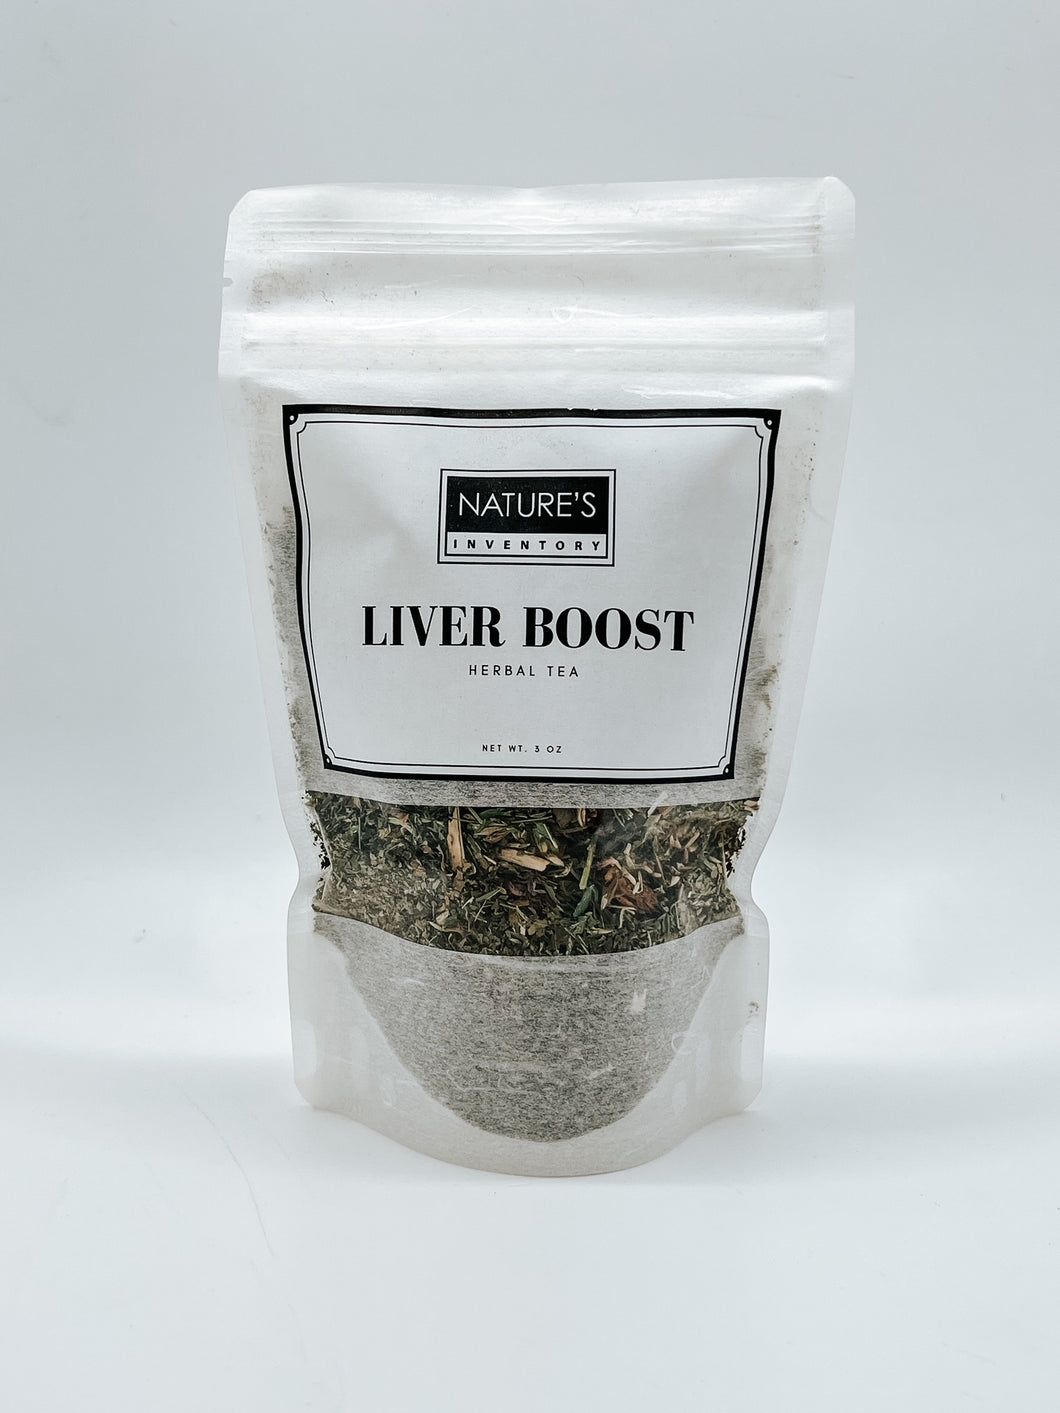 Liver Boost - Loose Leaf Herbal Tea